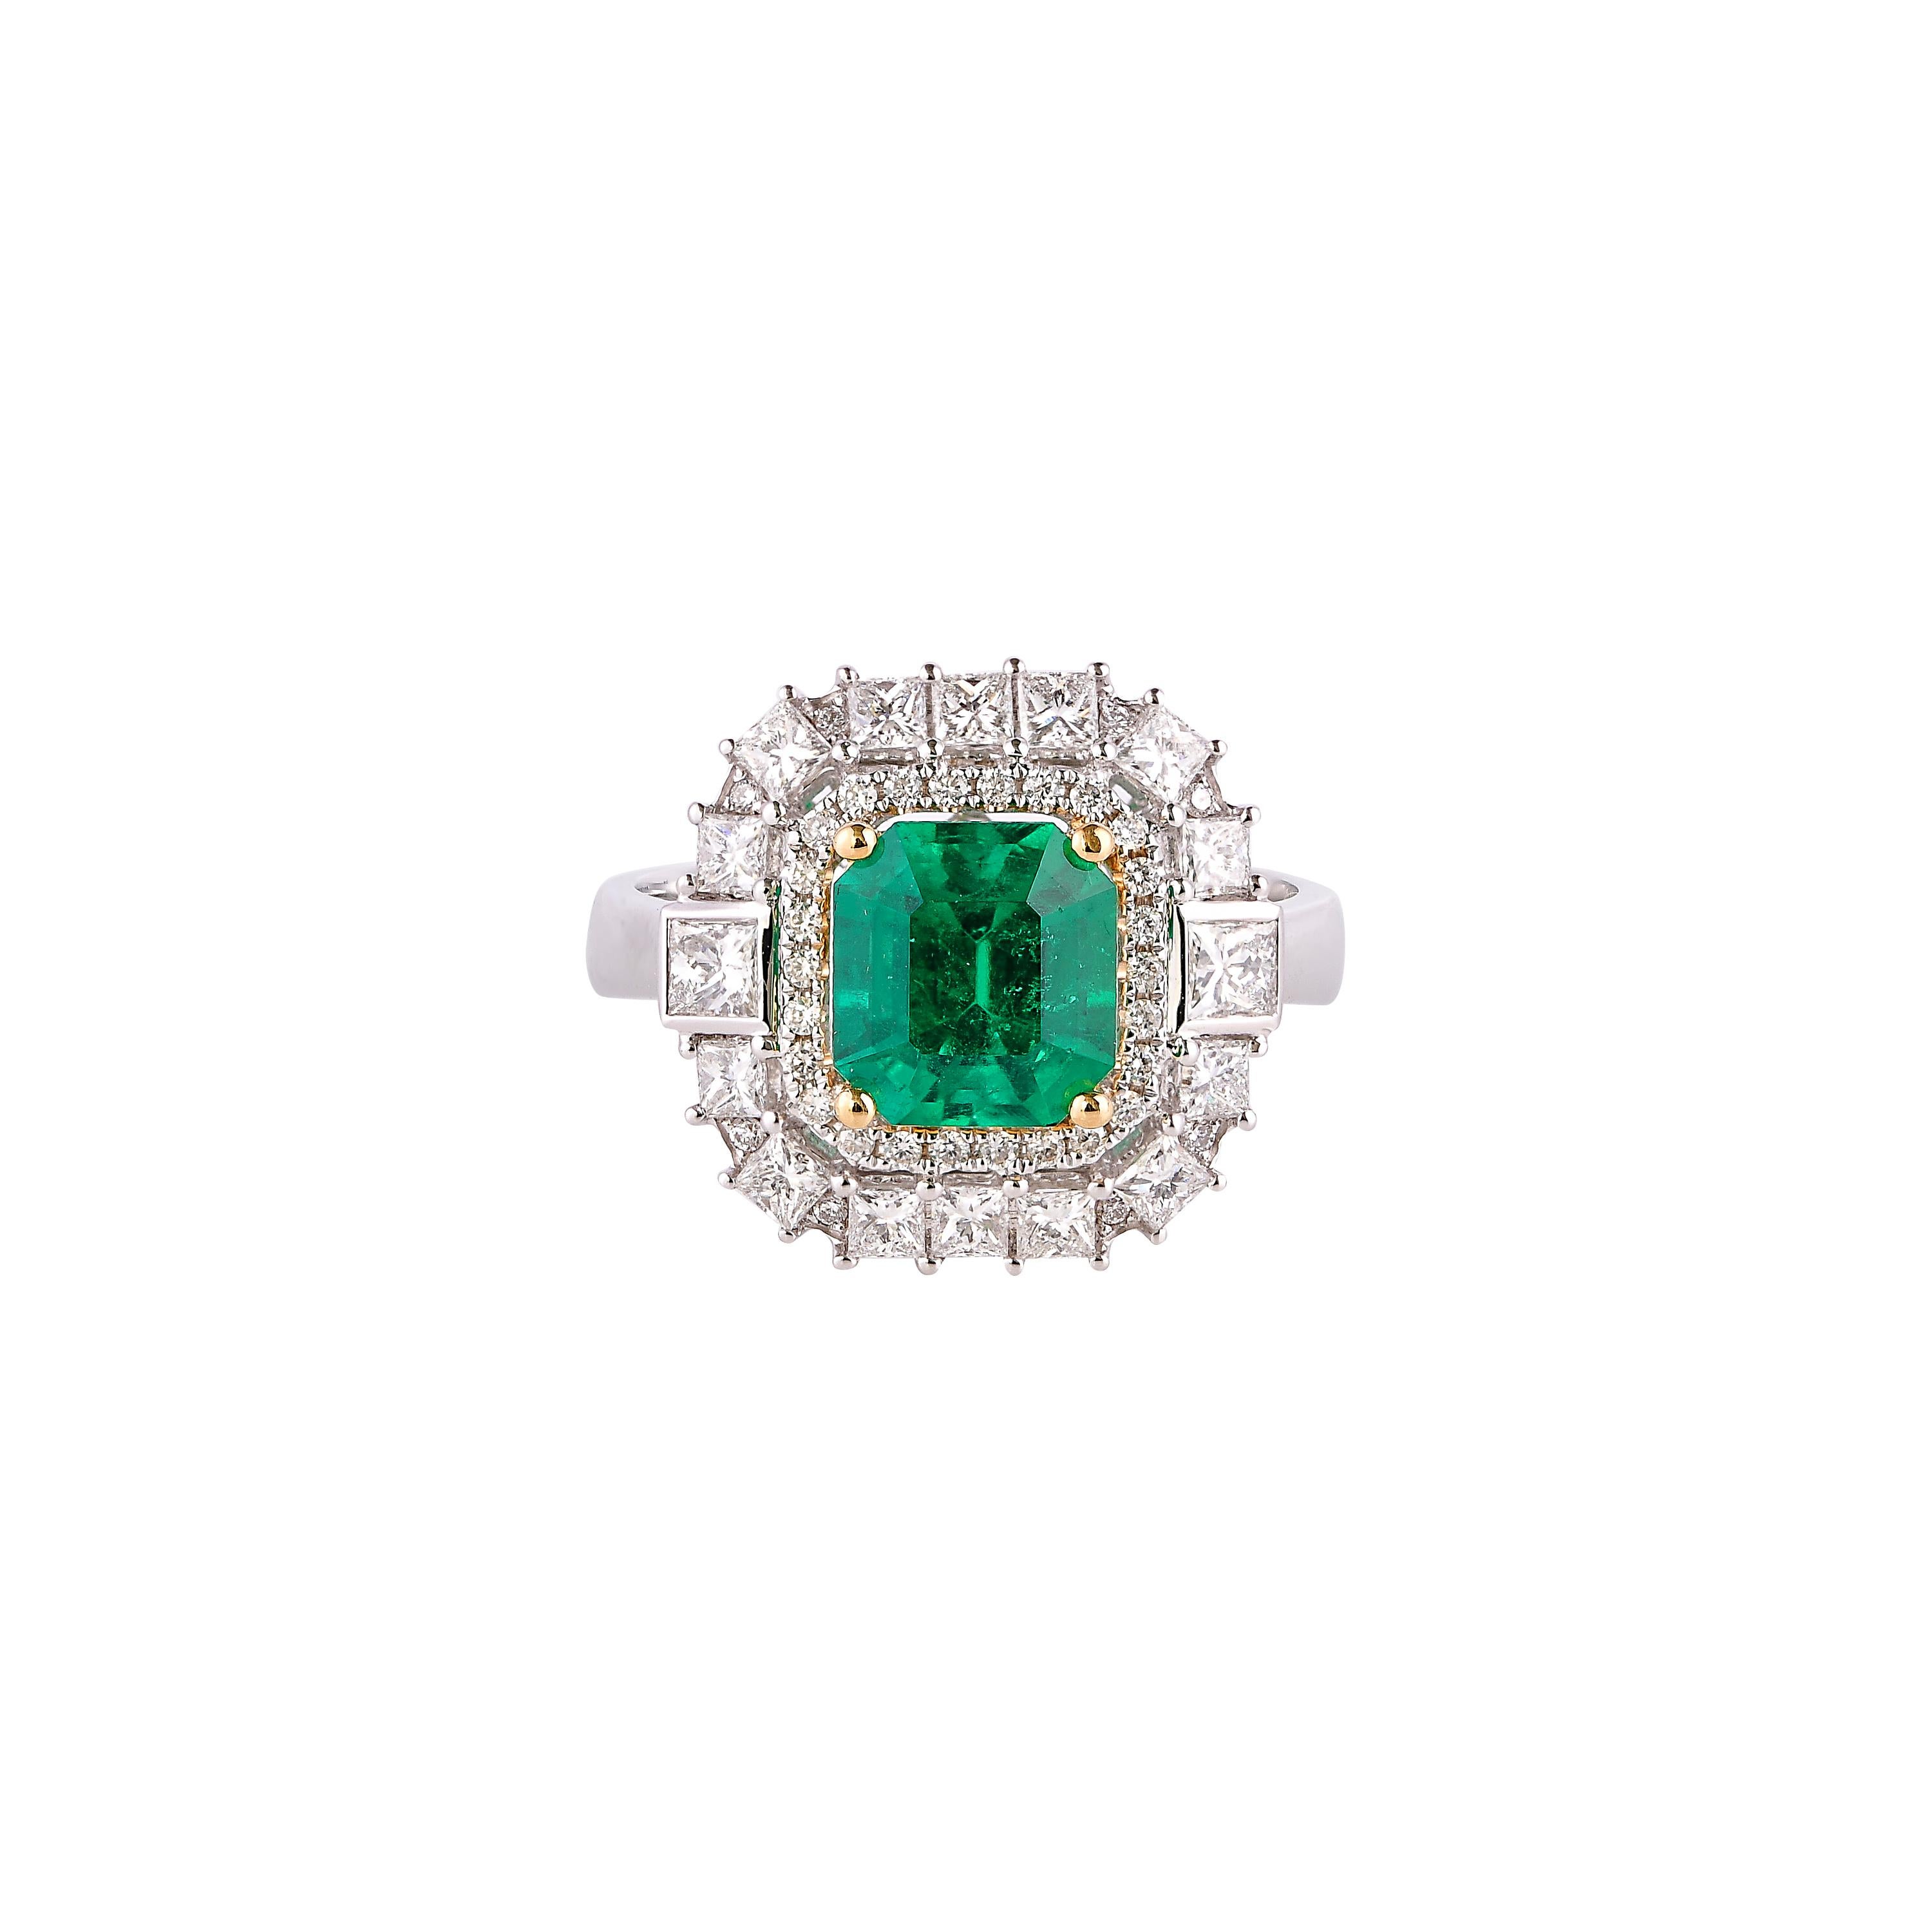 Art Deco 1.7 Carat Muzo Colombian Emerald and White Diamond Ring in 18 Karat White Gold For Sale